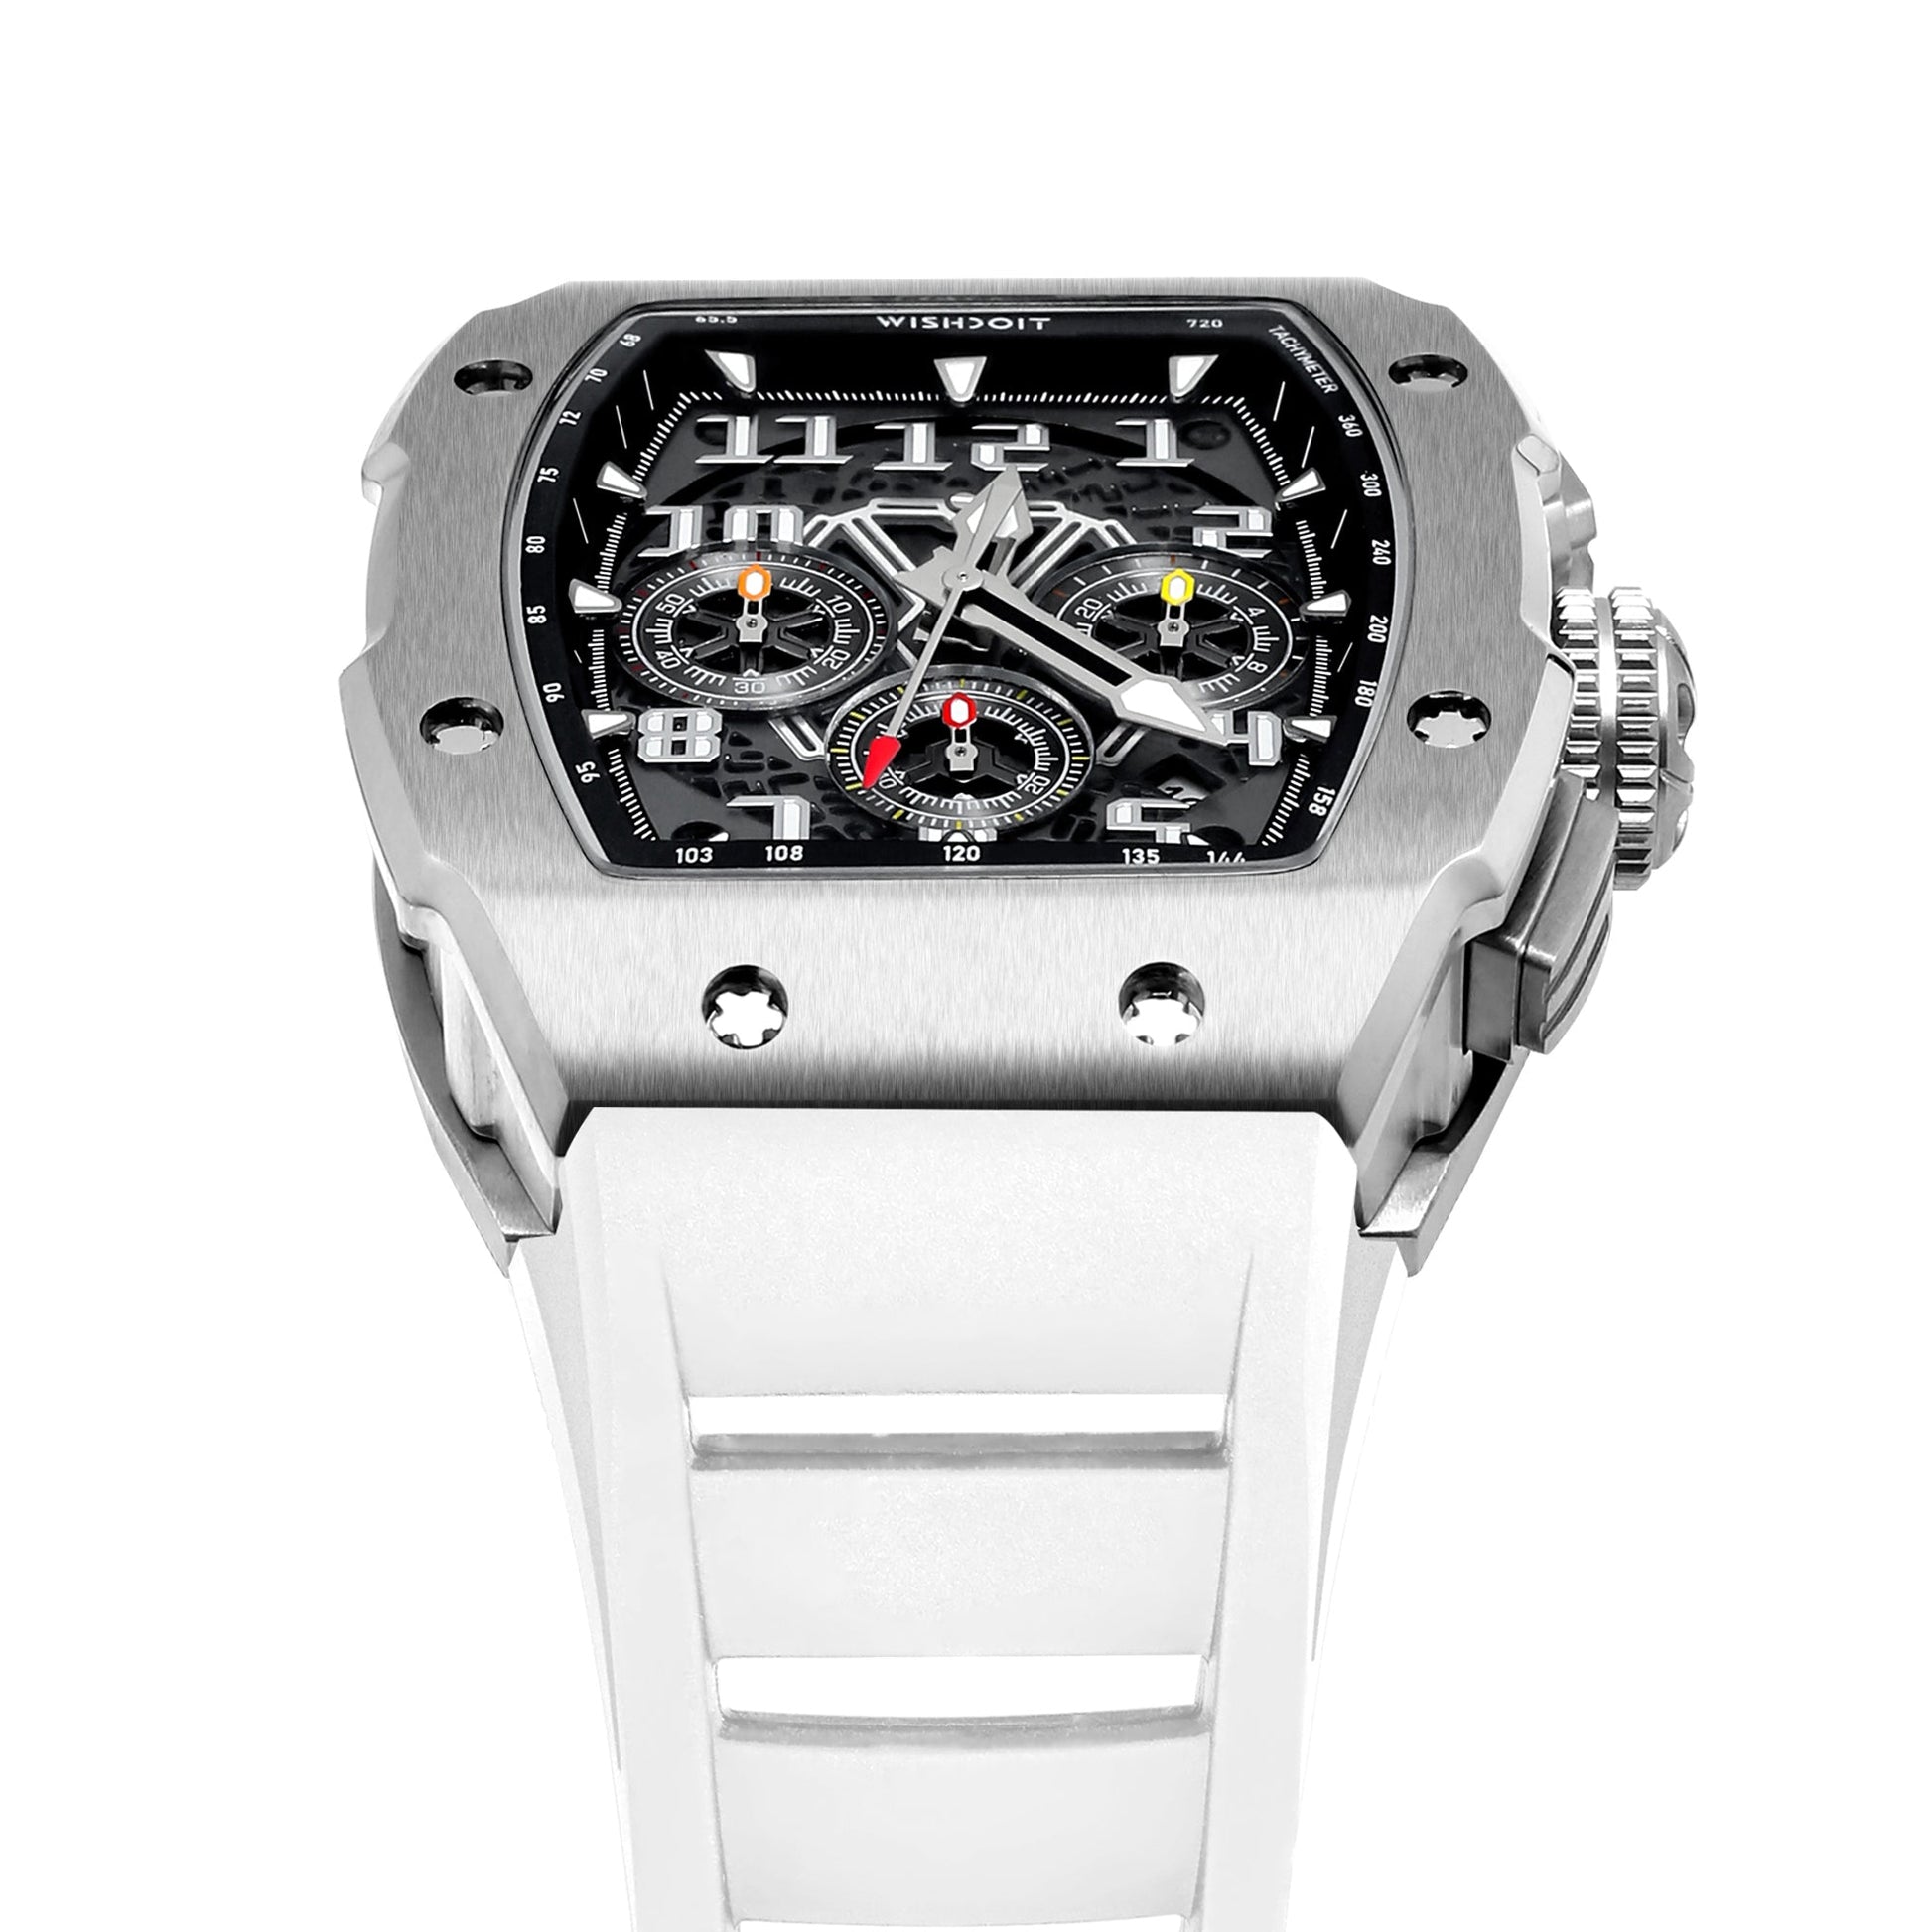 Shop Racing GT Chronograph Quartz Silver White Watch on Wishdoit Watches